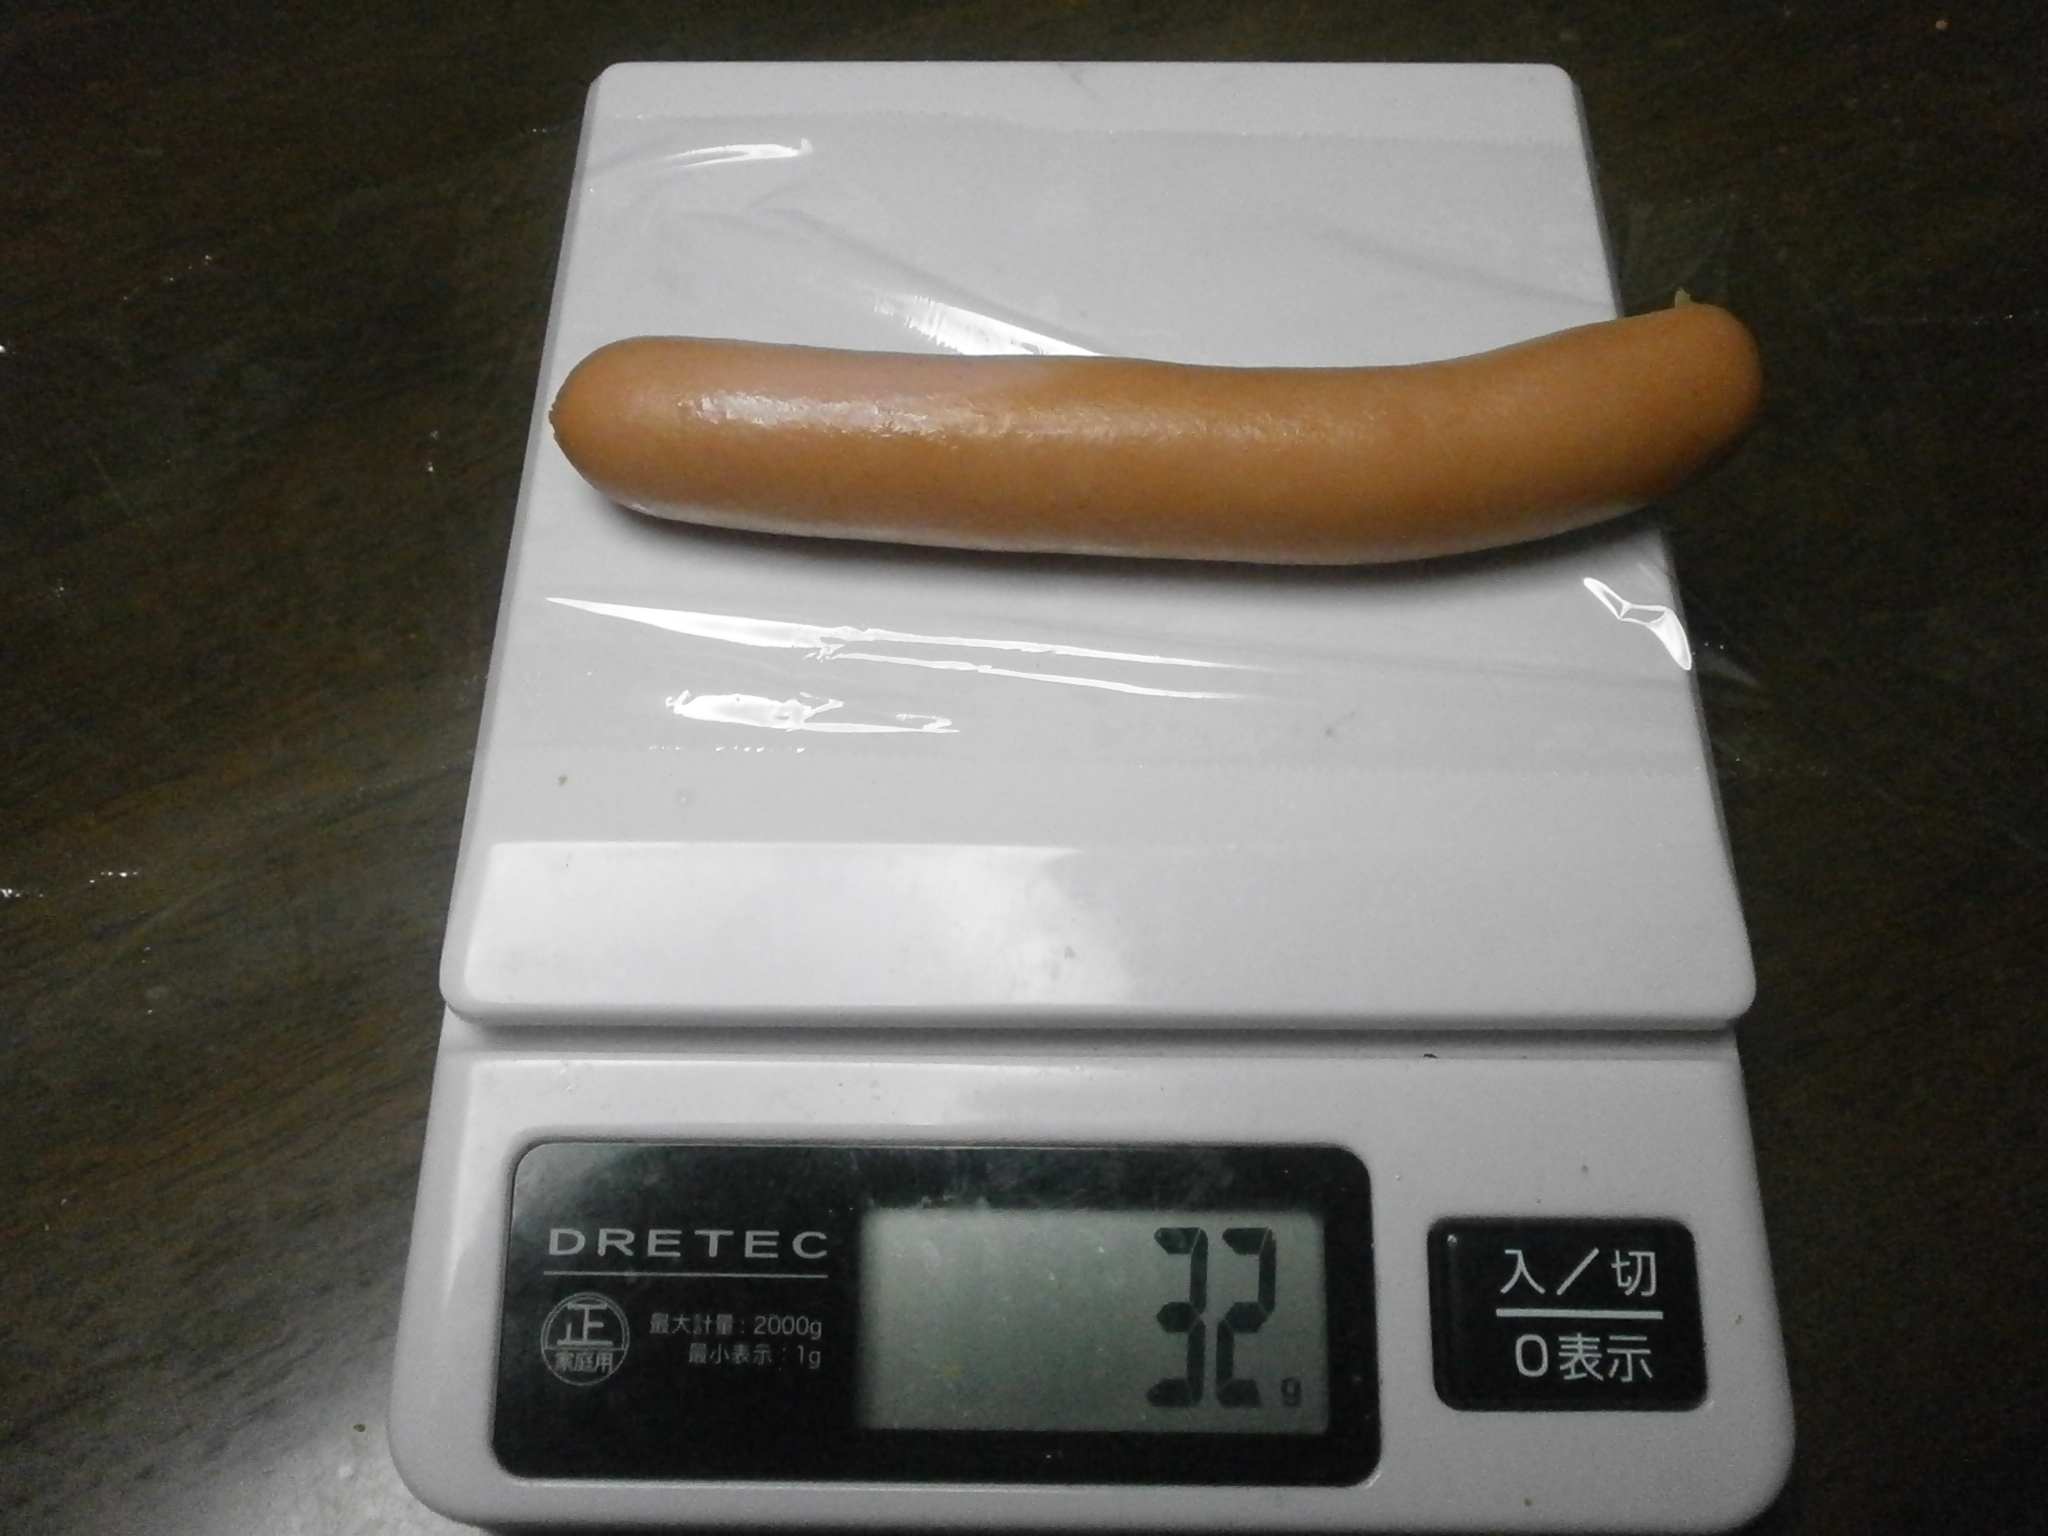 Which high-calorie? Natto? Sausage?